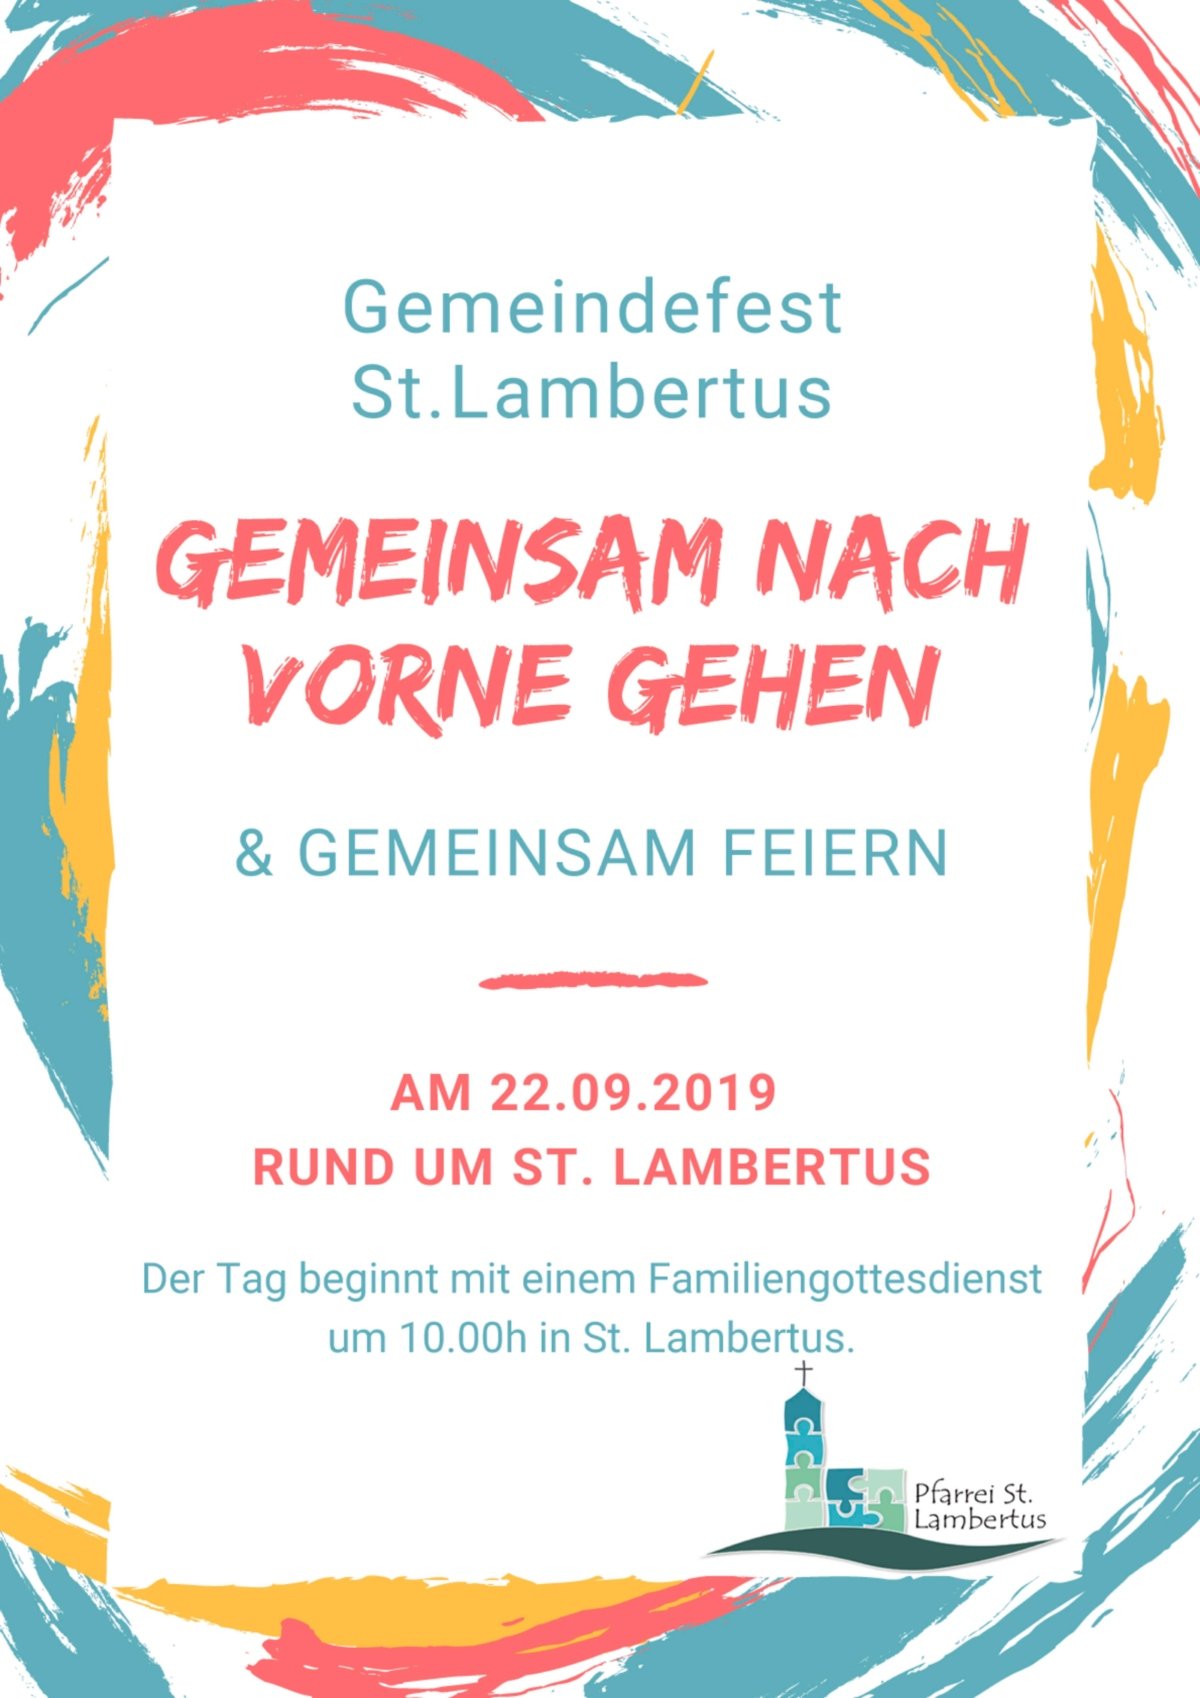 Gemeindefest St. Lambertus 22.9.19 (c) Pfarrei St. Lambertus ME